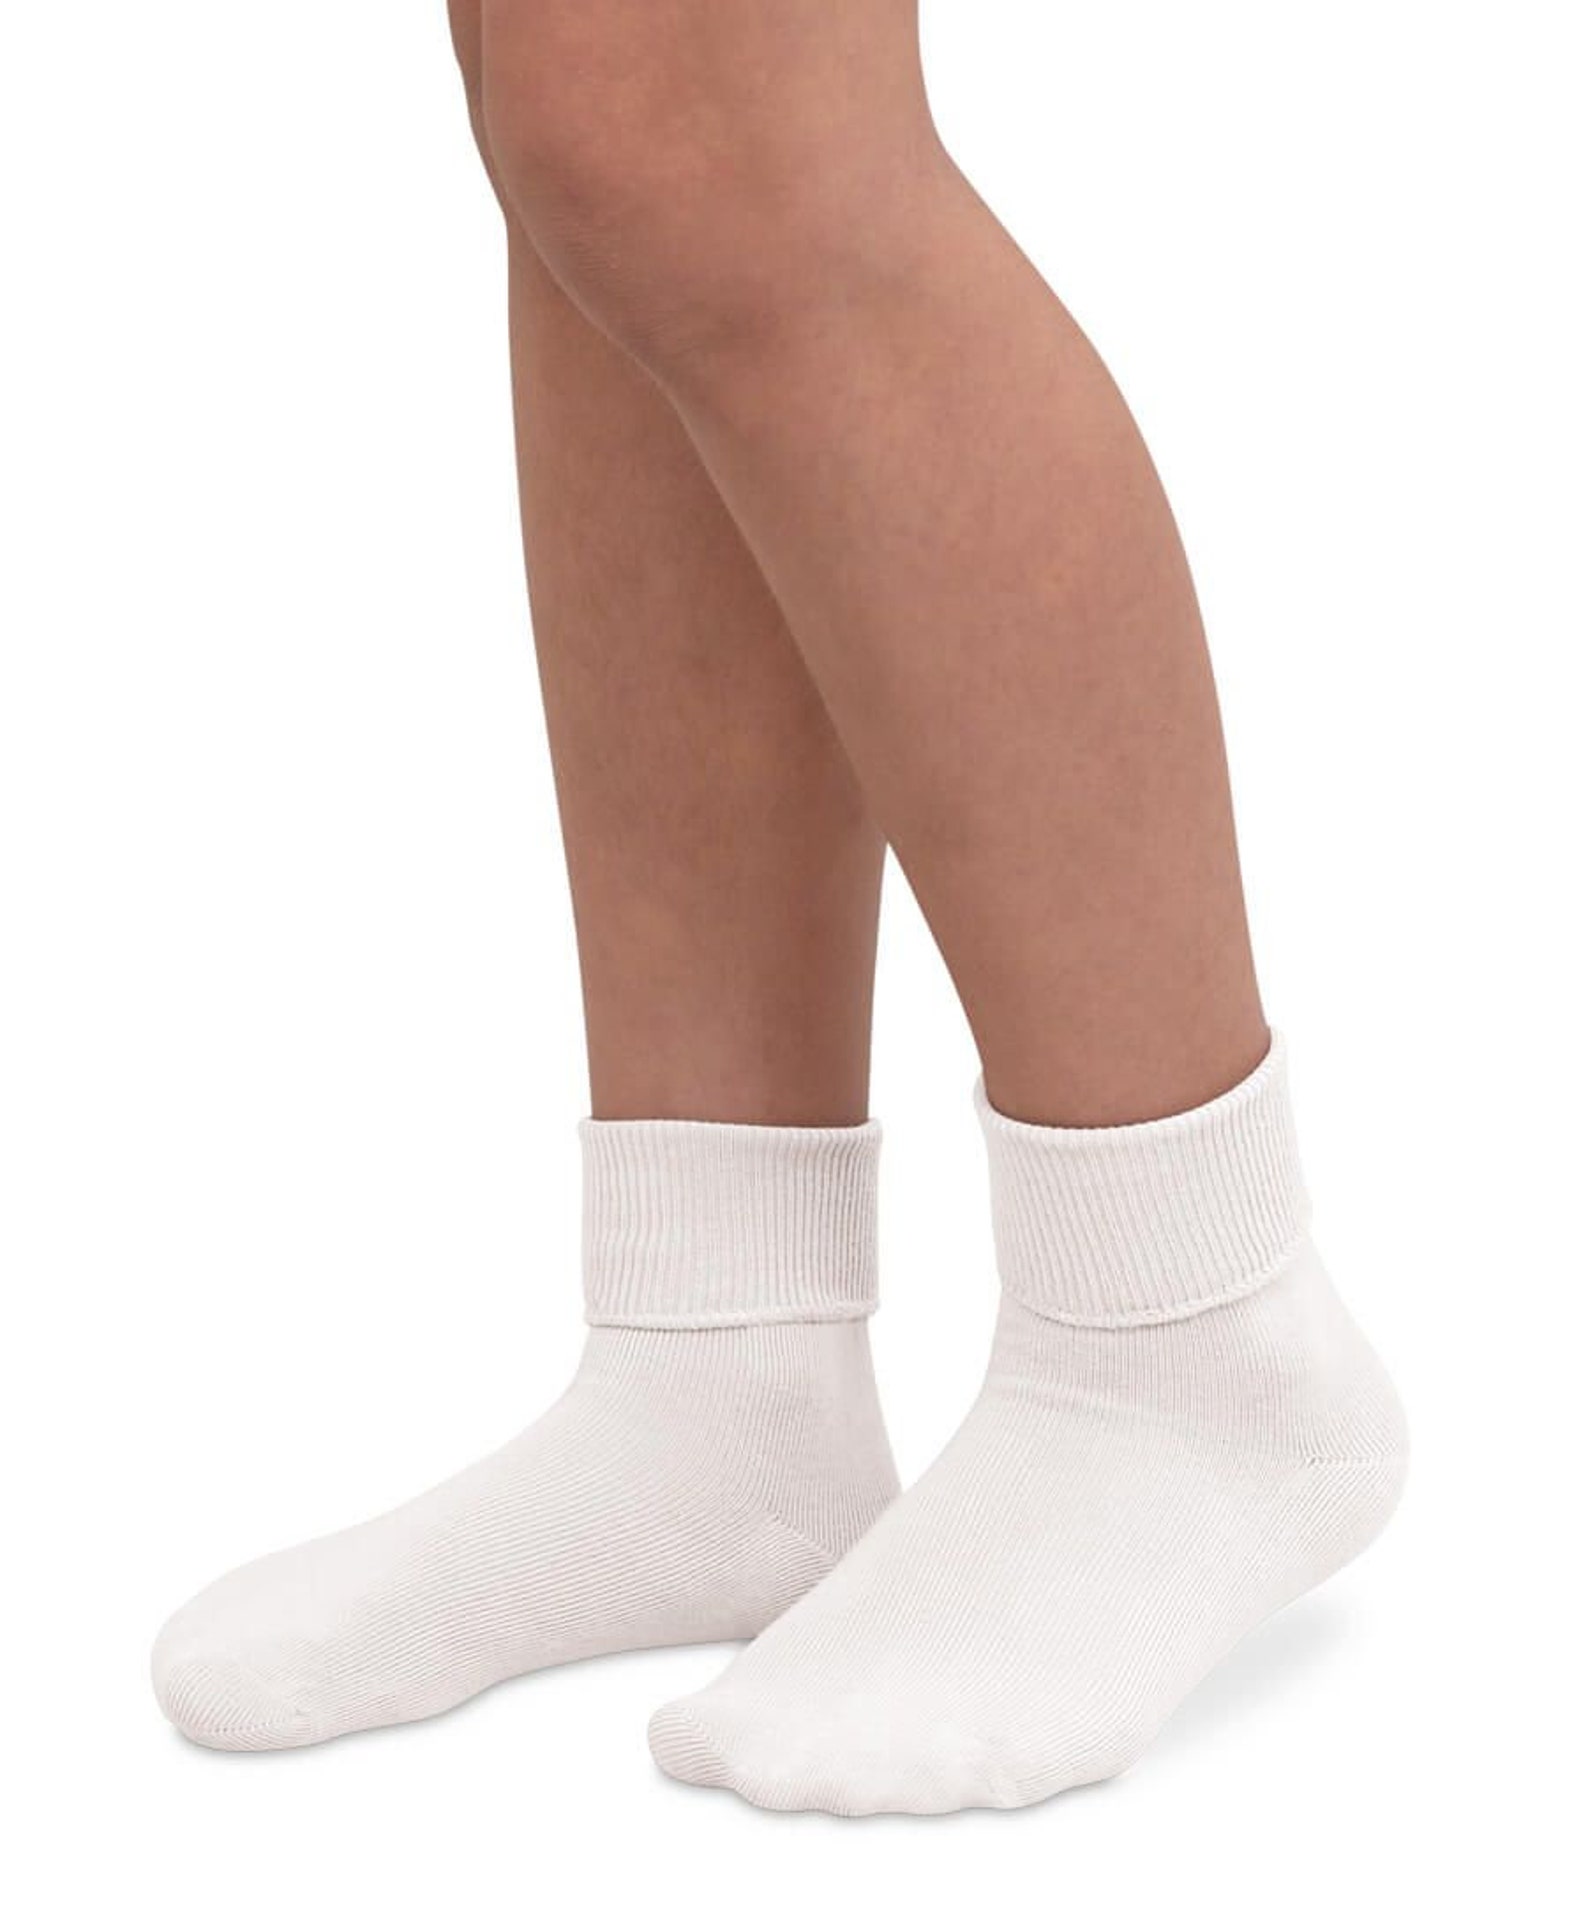 Brown or White Ankle Socks White Ankle Socks Brown Ankle - Etsy